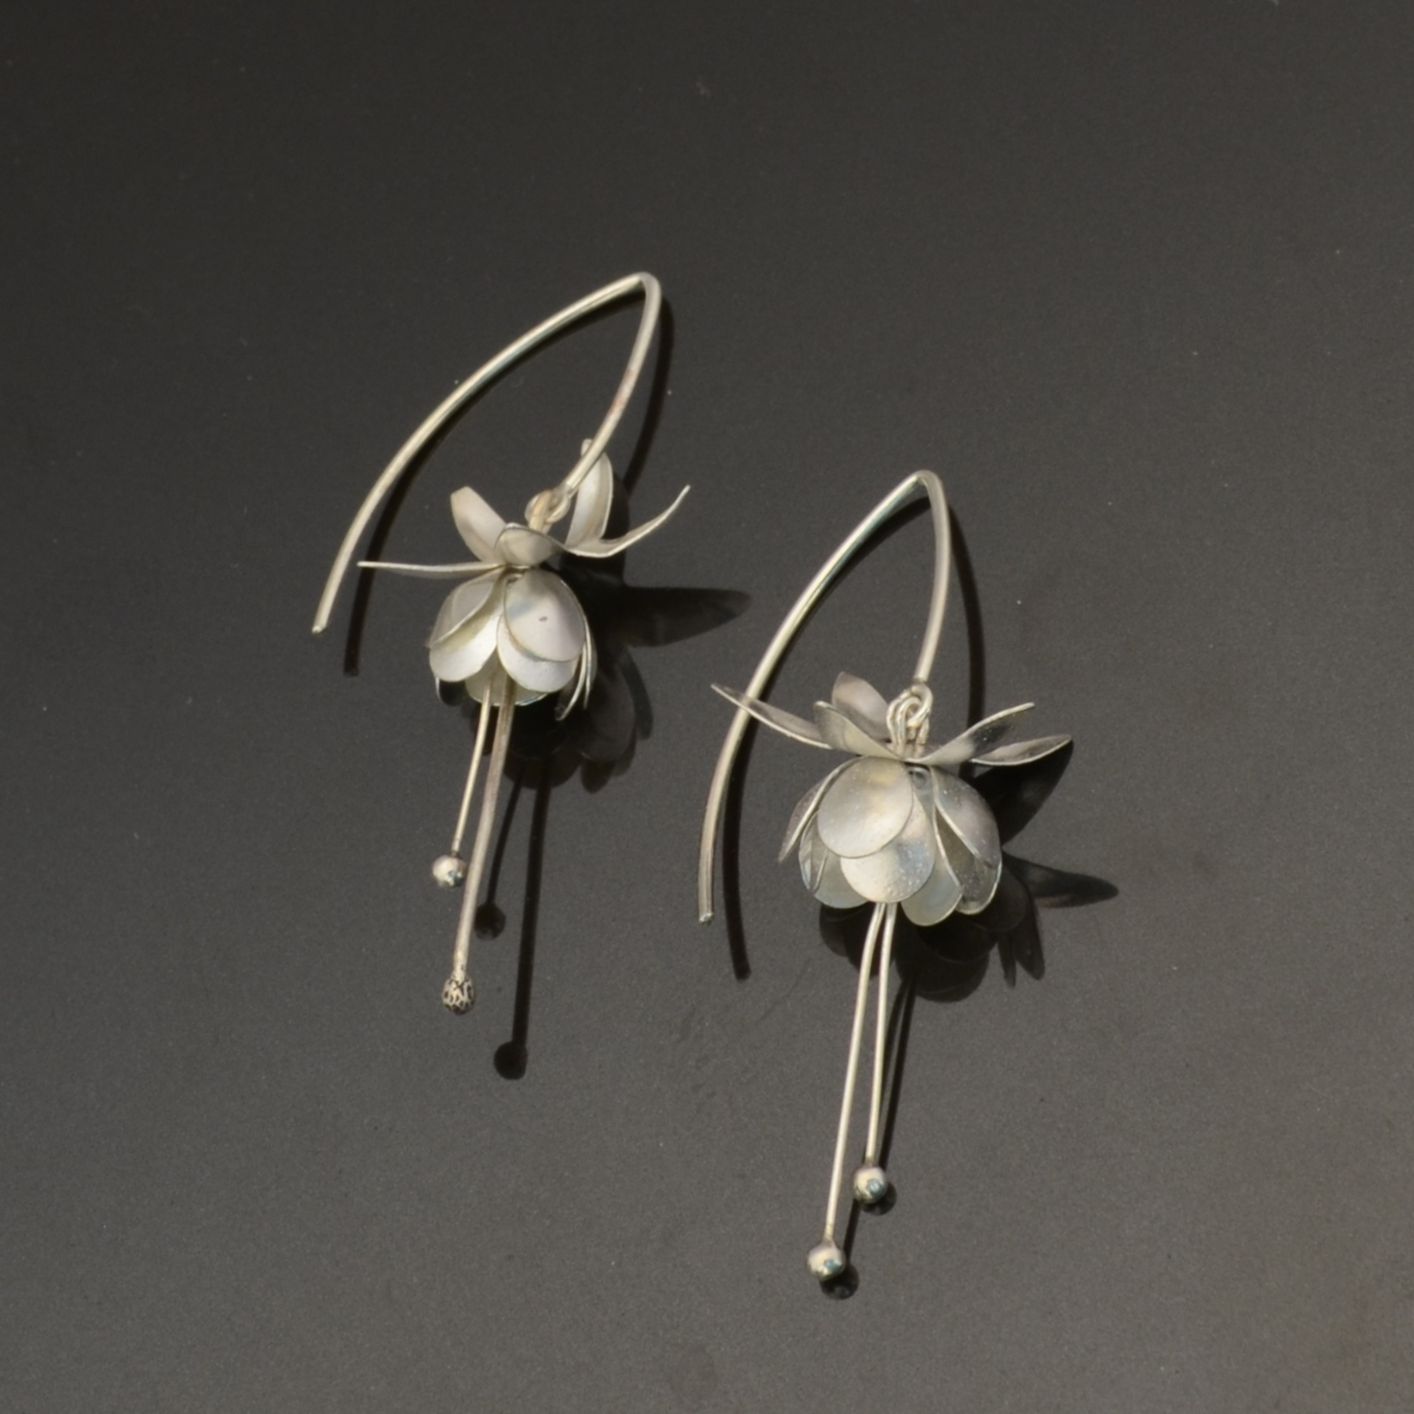 Fuchsia Earrings by Tracey Spurgin of Craftworx Jewellery Workshops